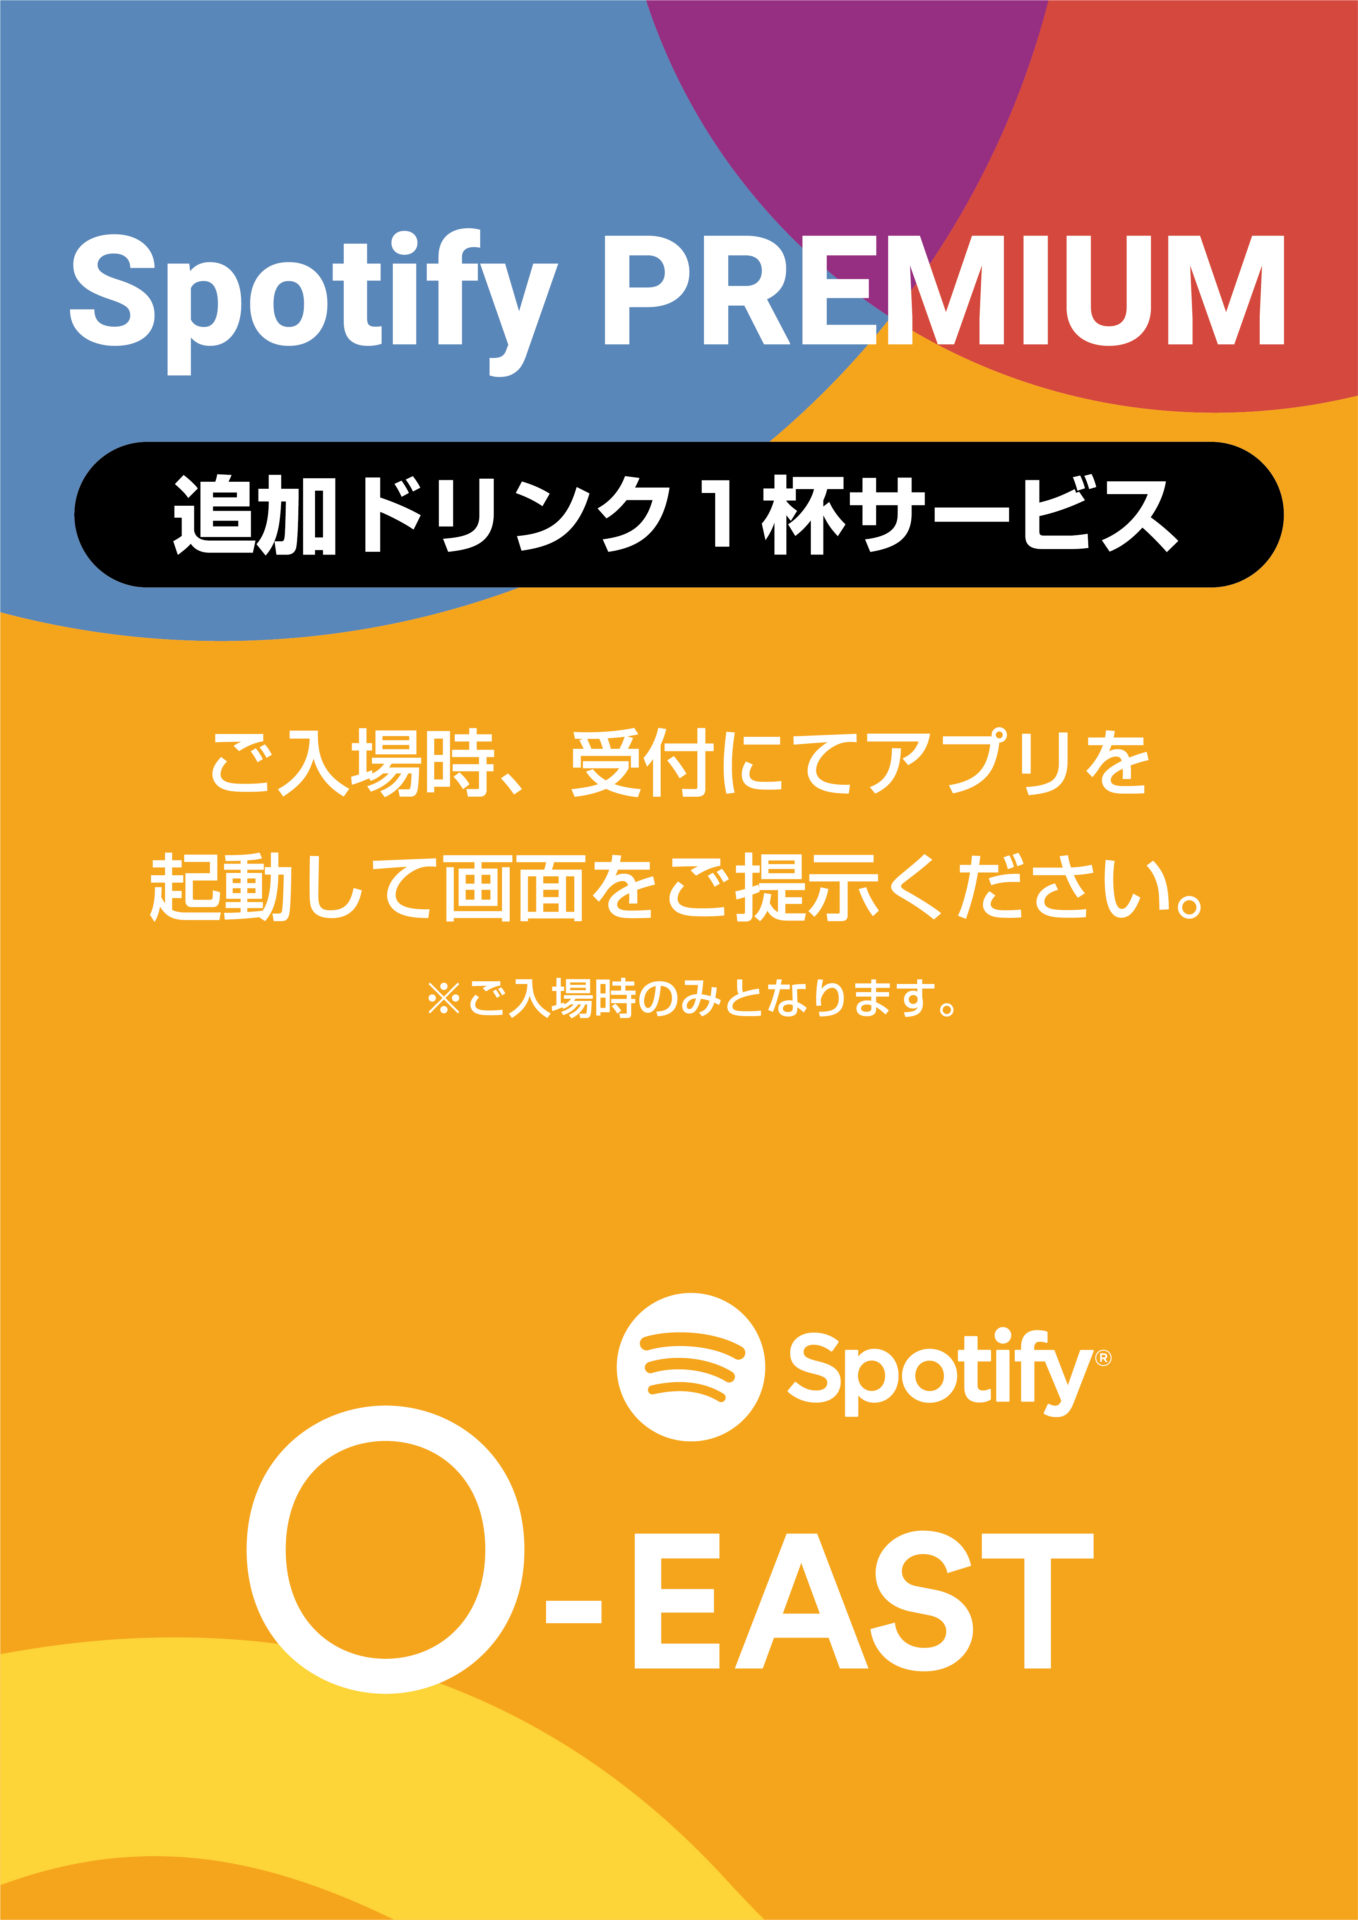 Spotify Premium追加ドリンク1杯サービス | Spotify O-EAST・O-WEST・O